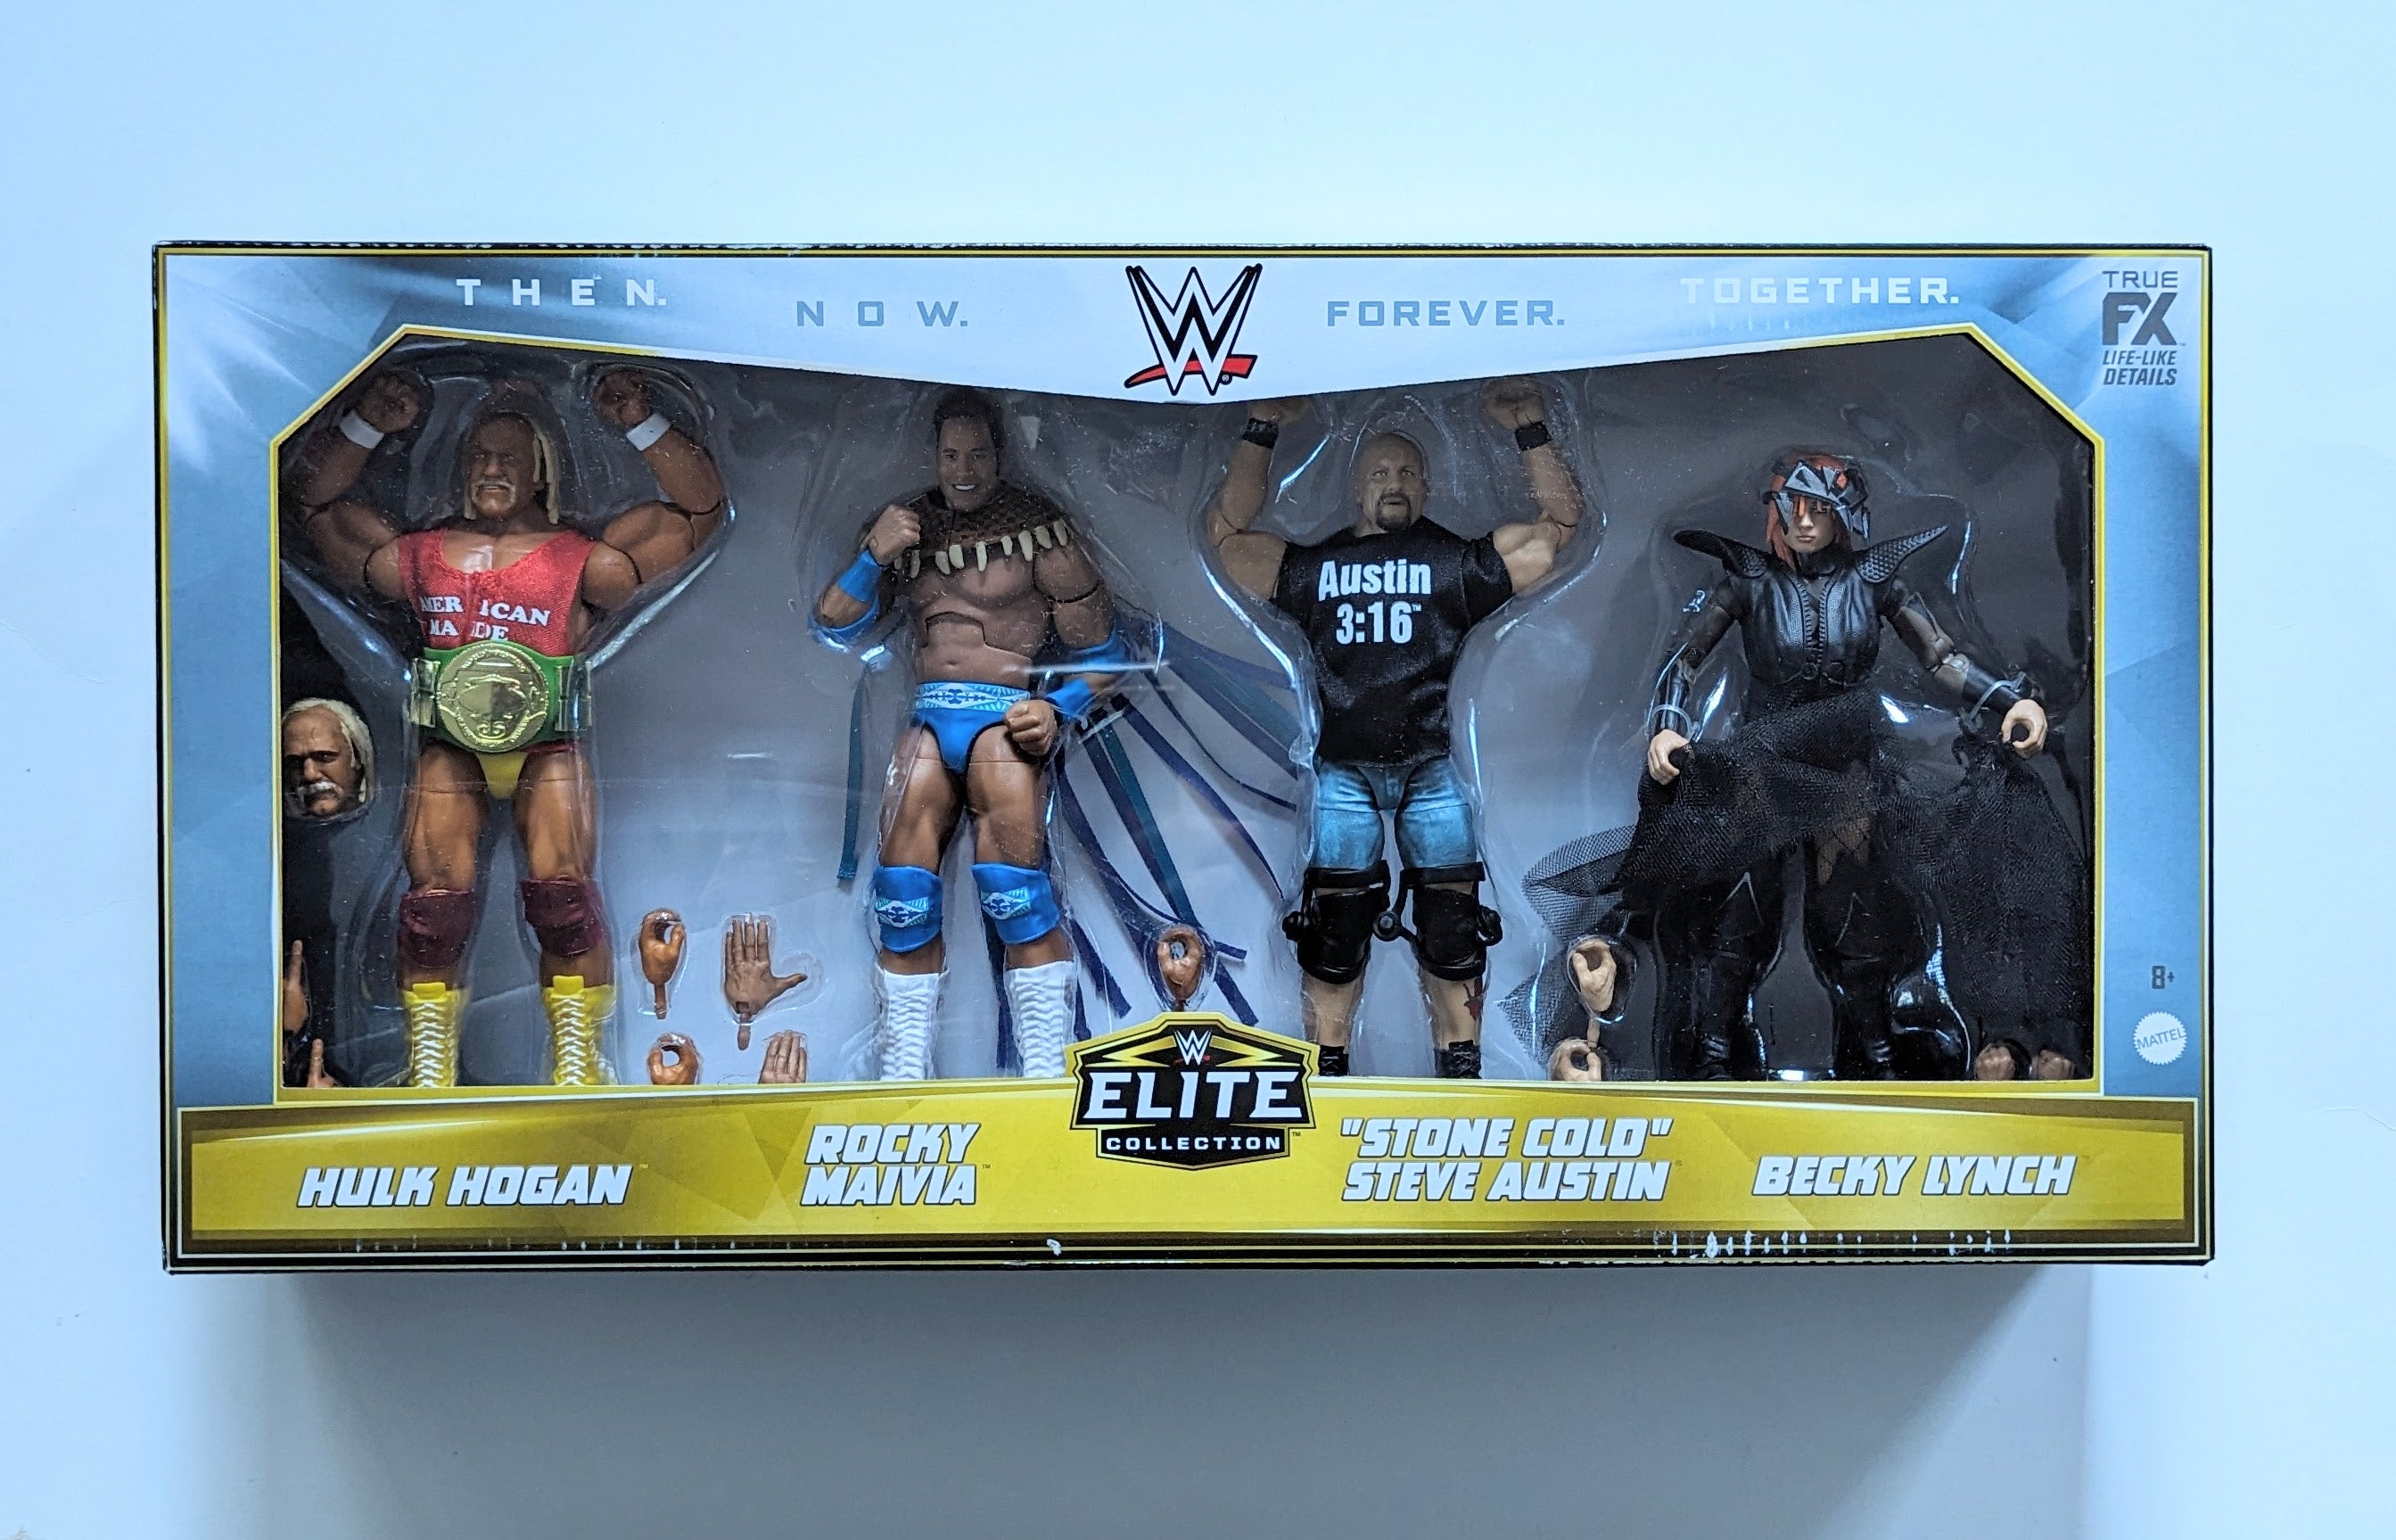 You Choose WWE Elite Collection Action Figures Mattel /super7 